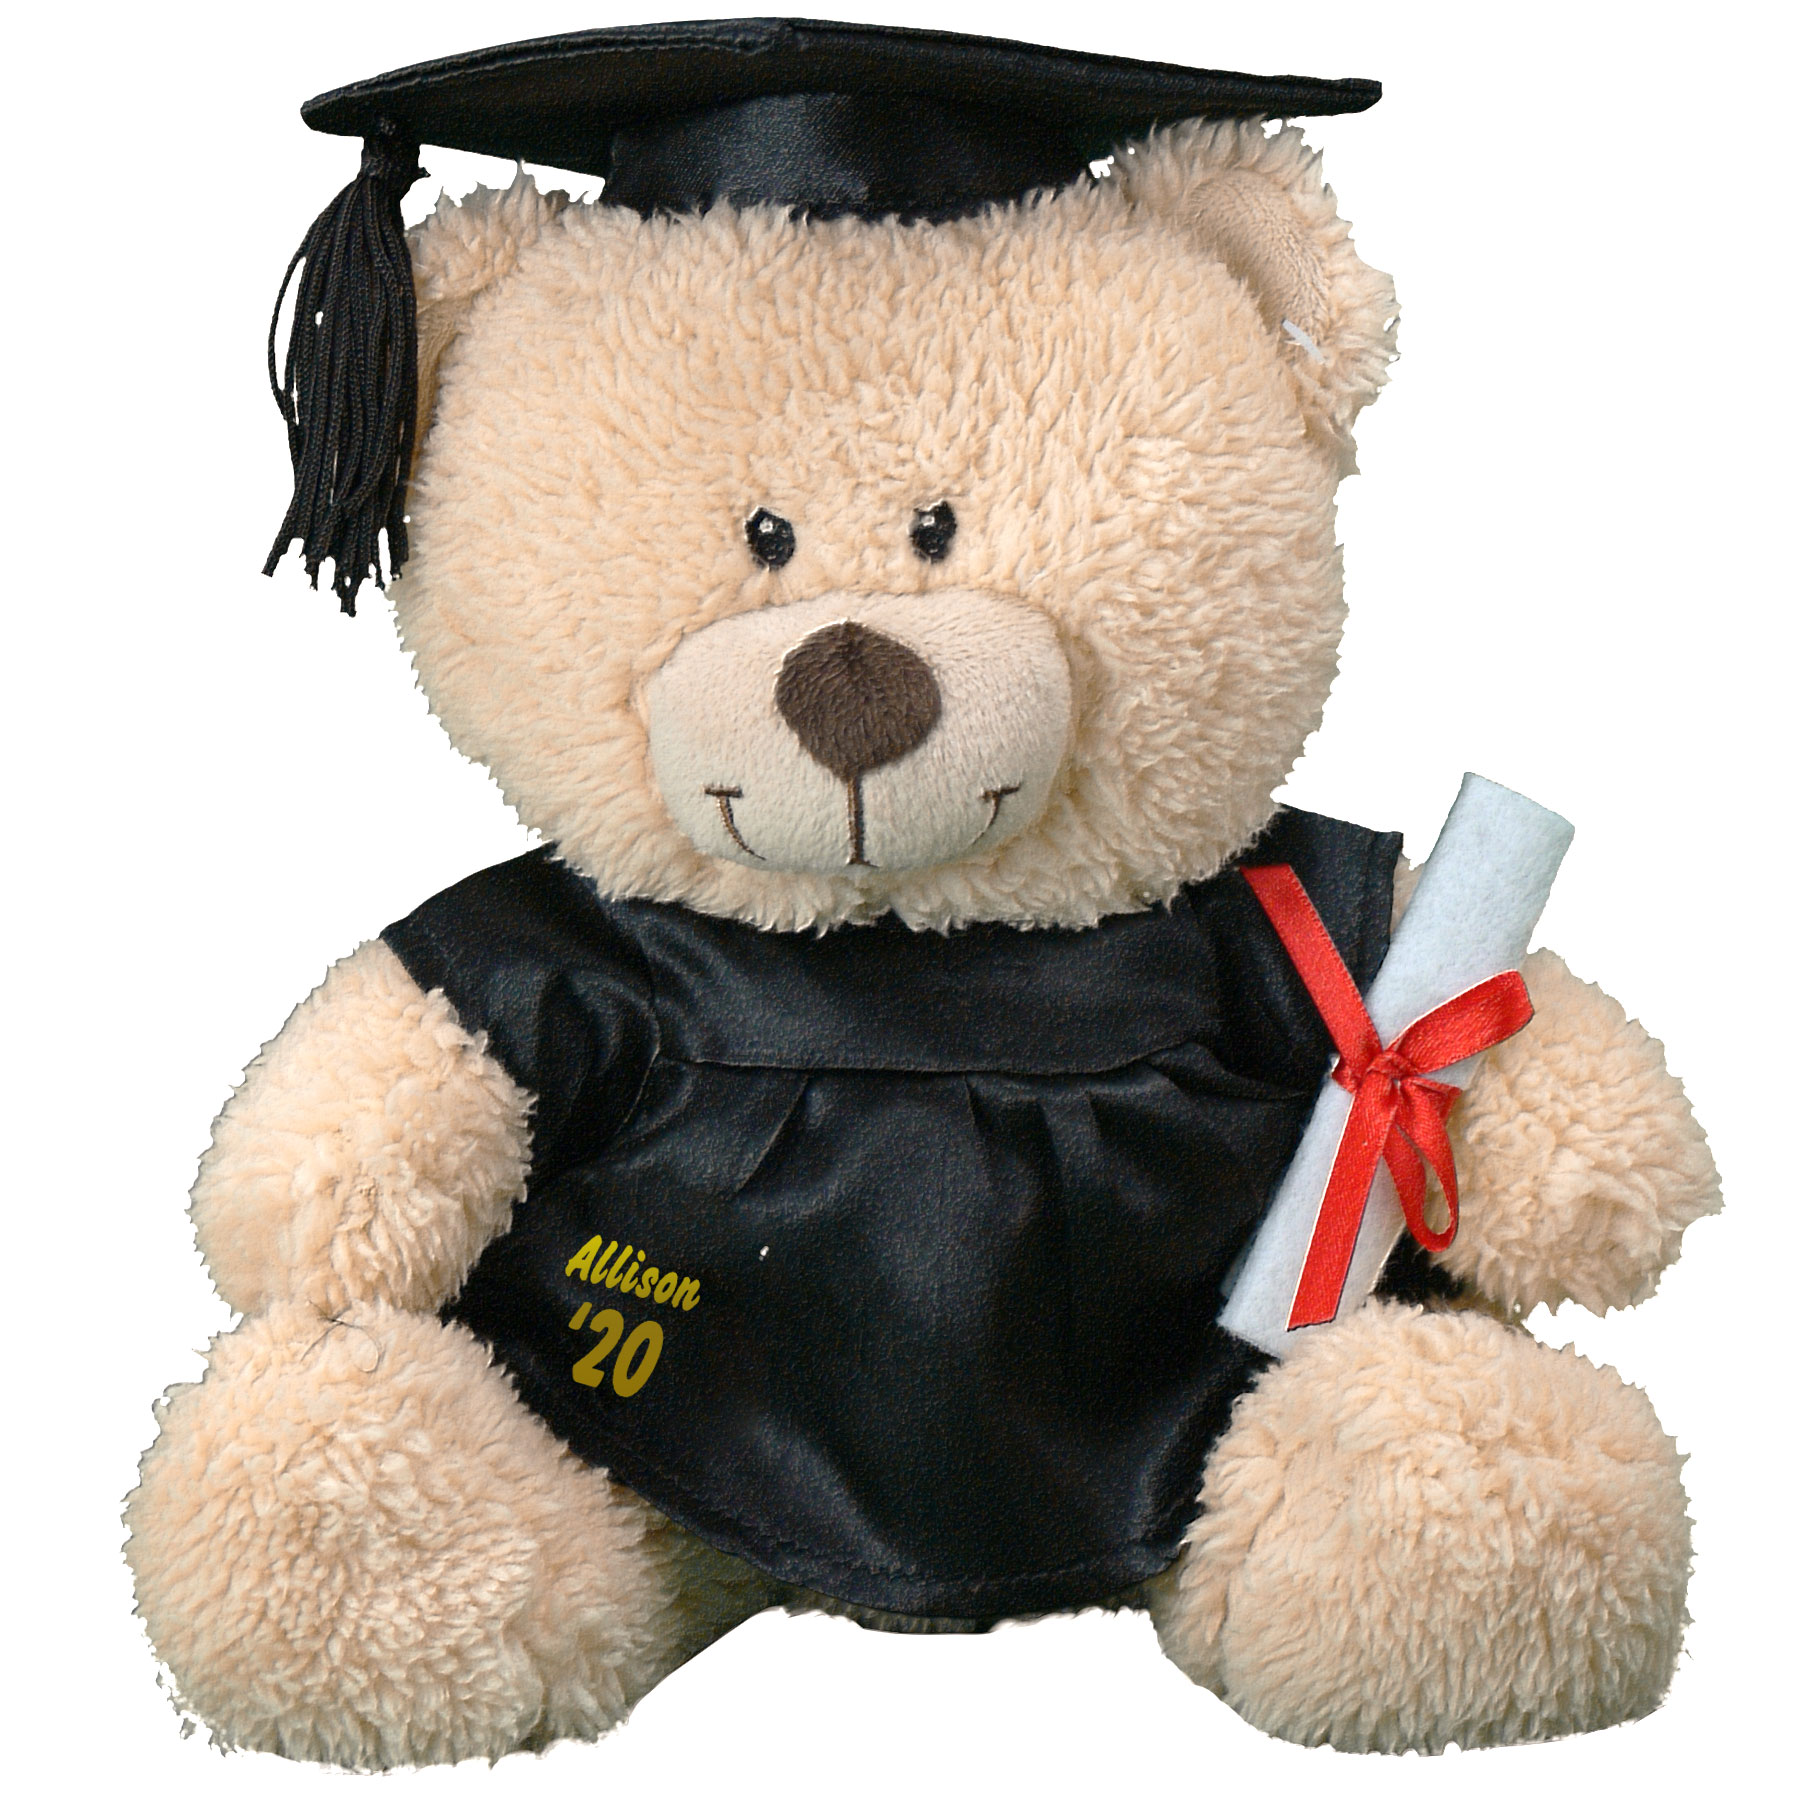 Graduation Cap and Gown Teddy Bear 11"